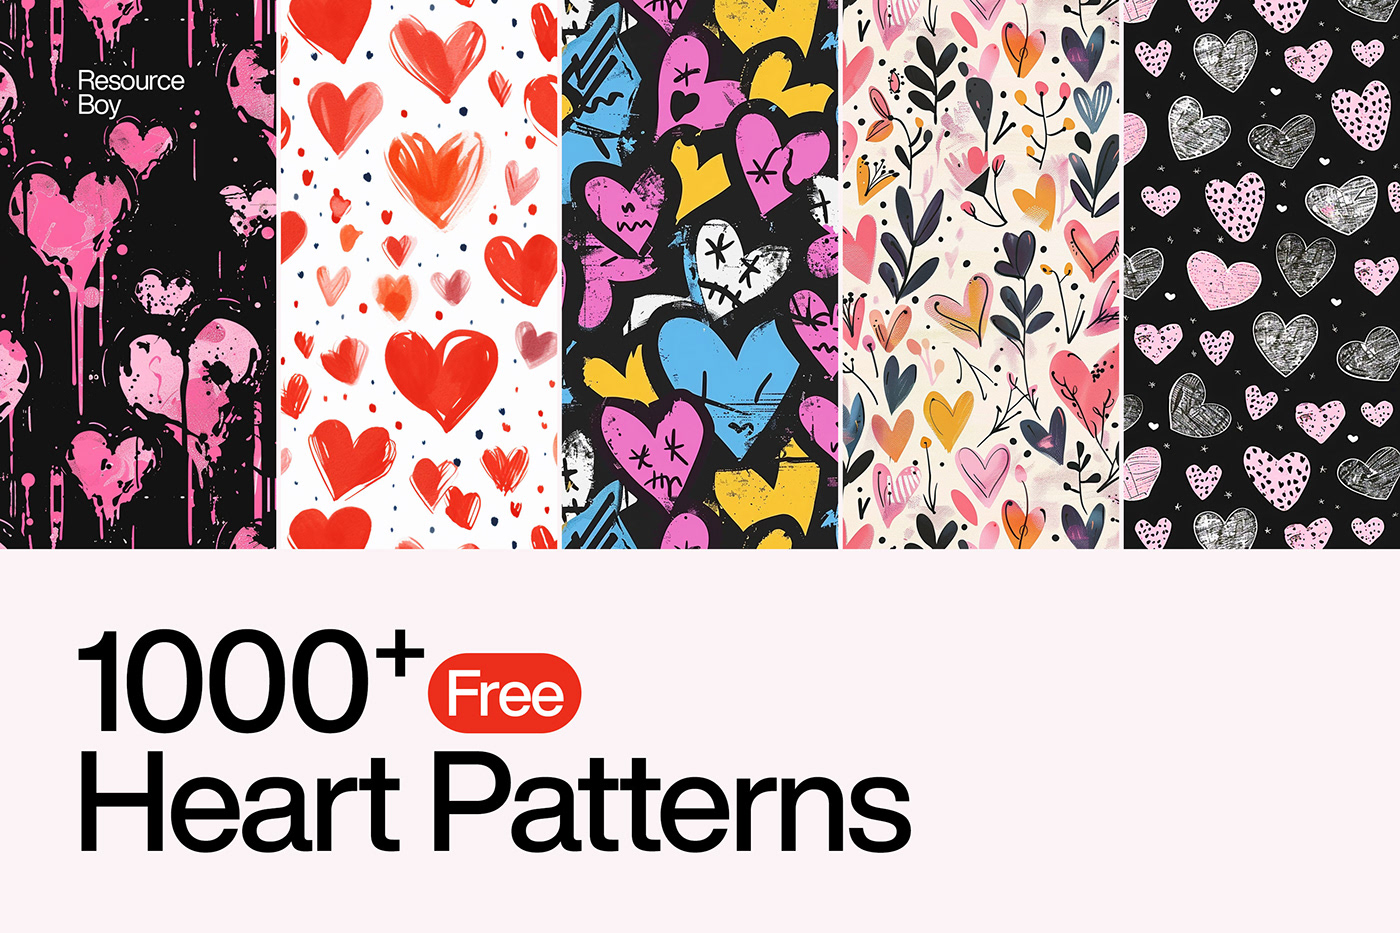 heart Love free download freebie pattern romantic seamless background texture